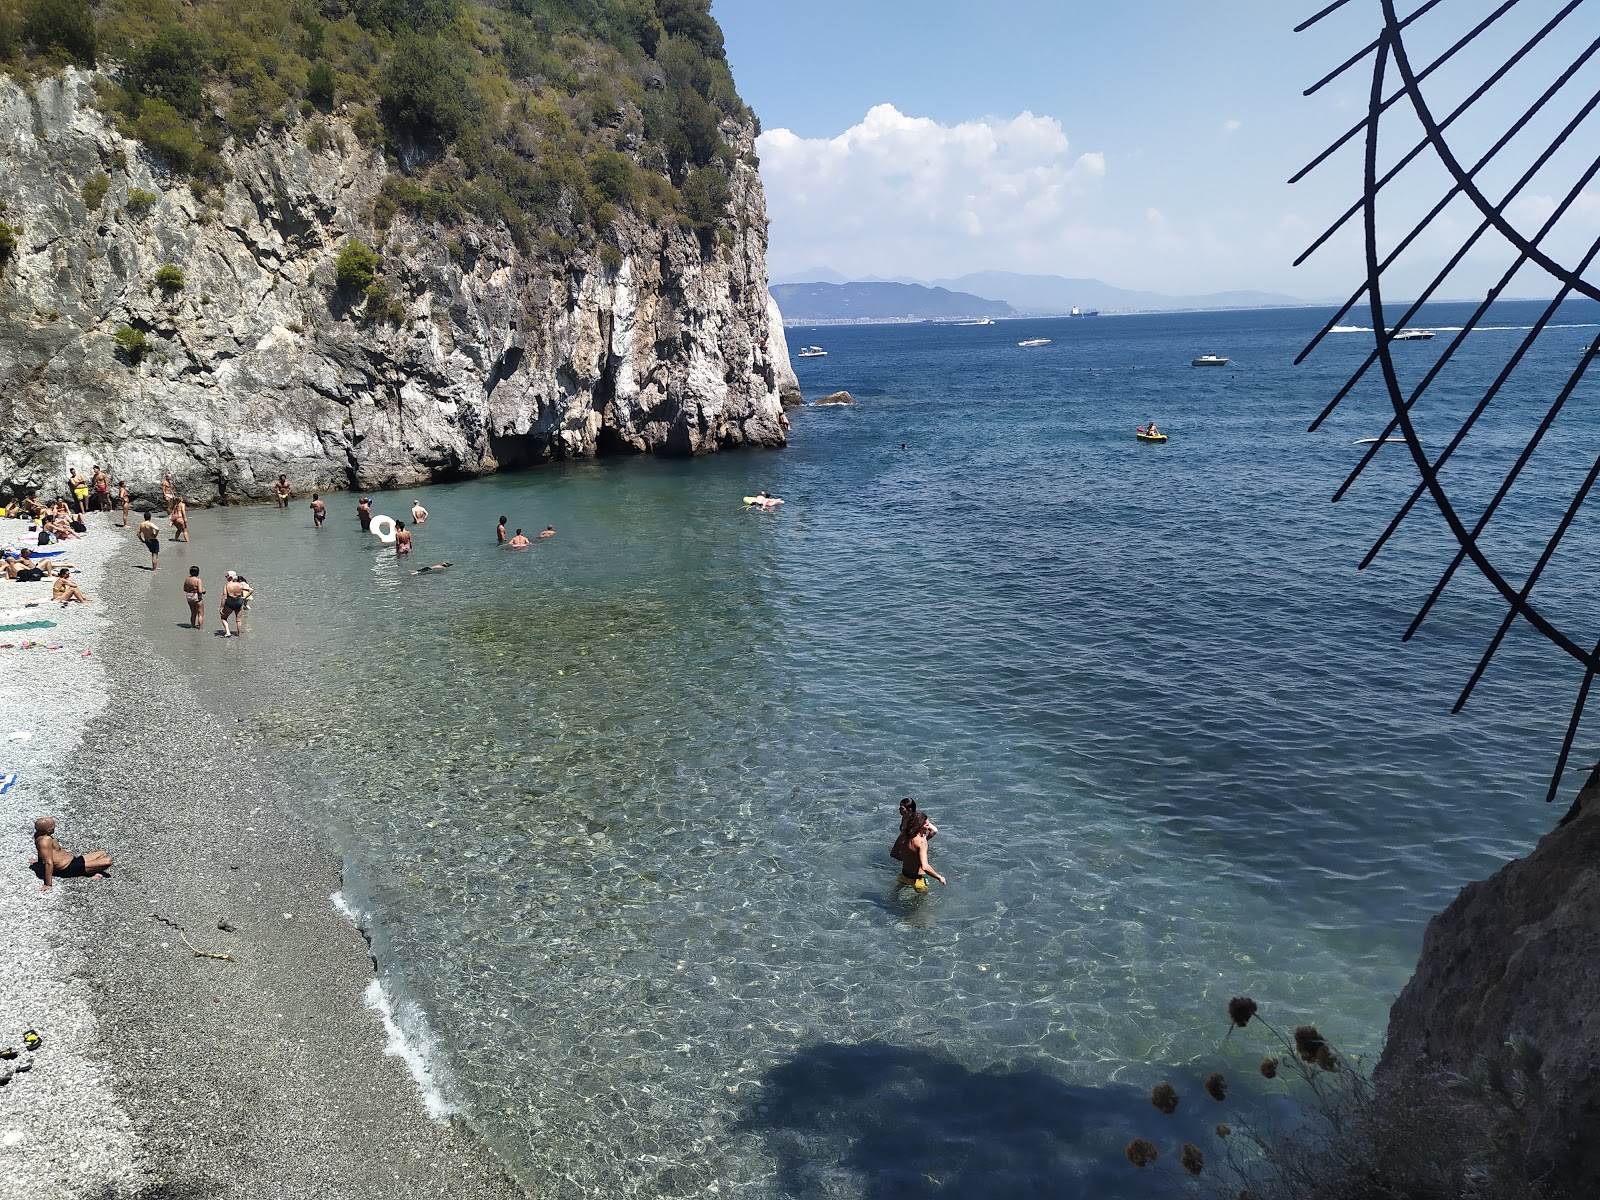 Spiaggia di Sovrano'in fotoğrafı mavi saf su yüzey ile